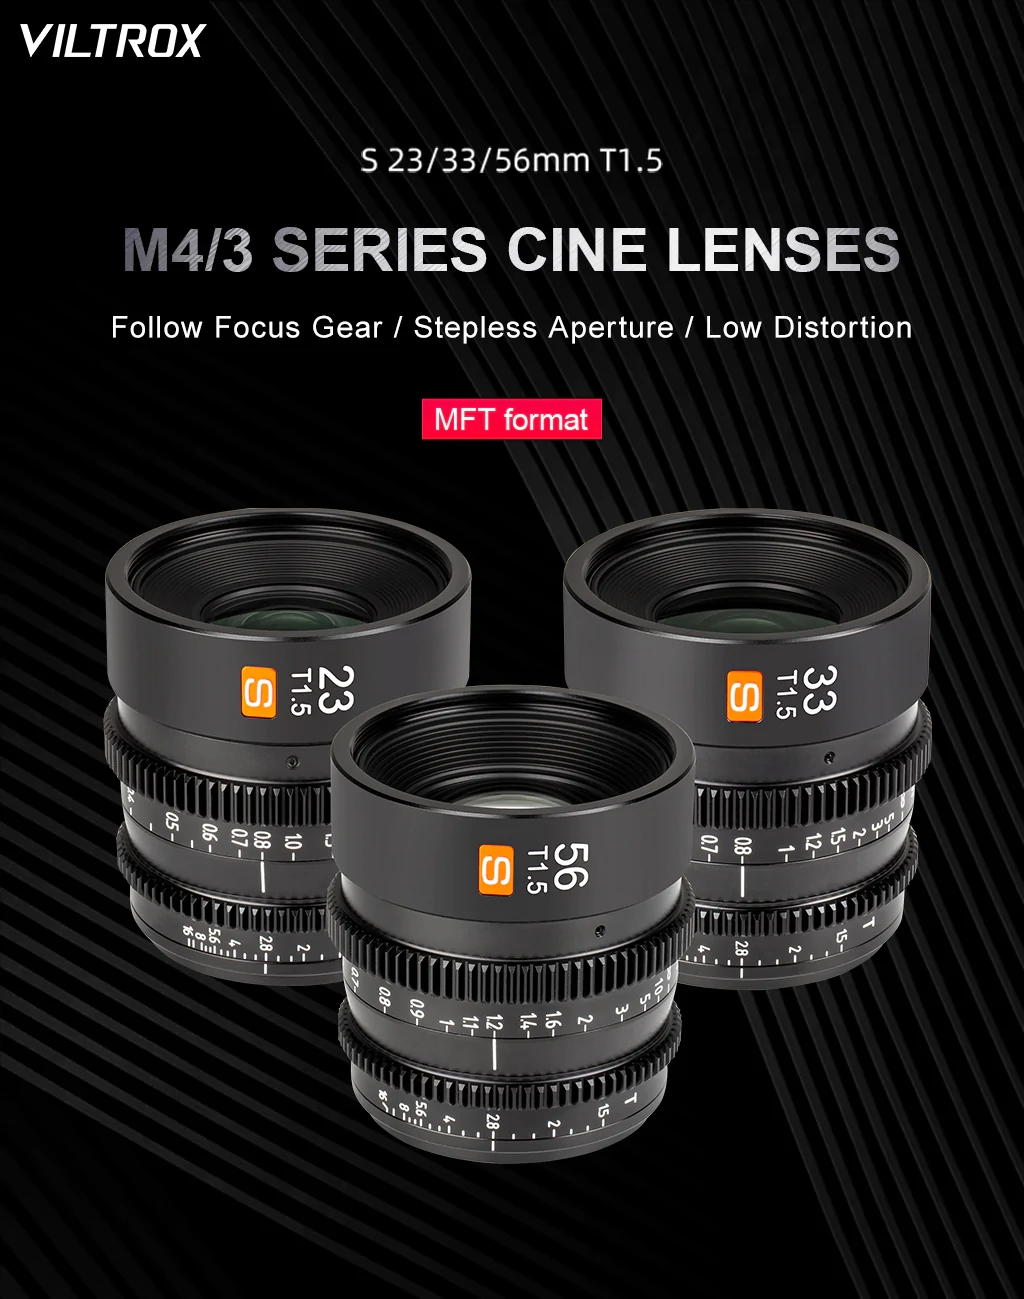 promo : Viltrox Micro Four Third Series Cine Lenses